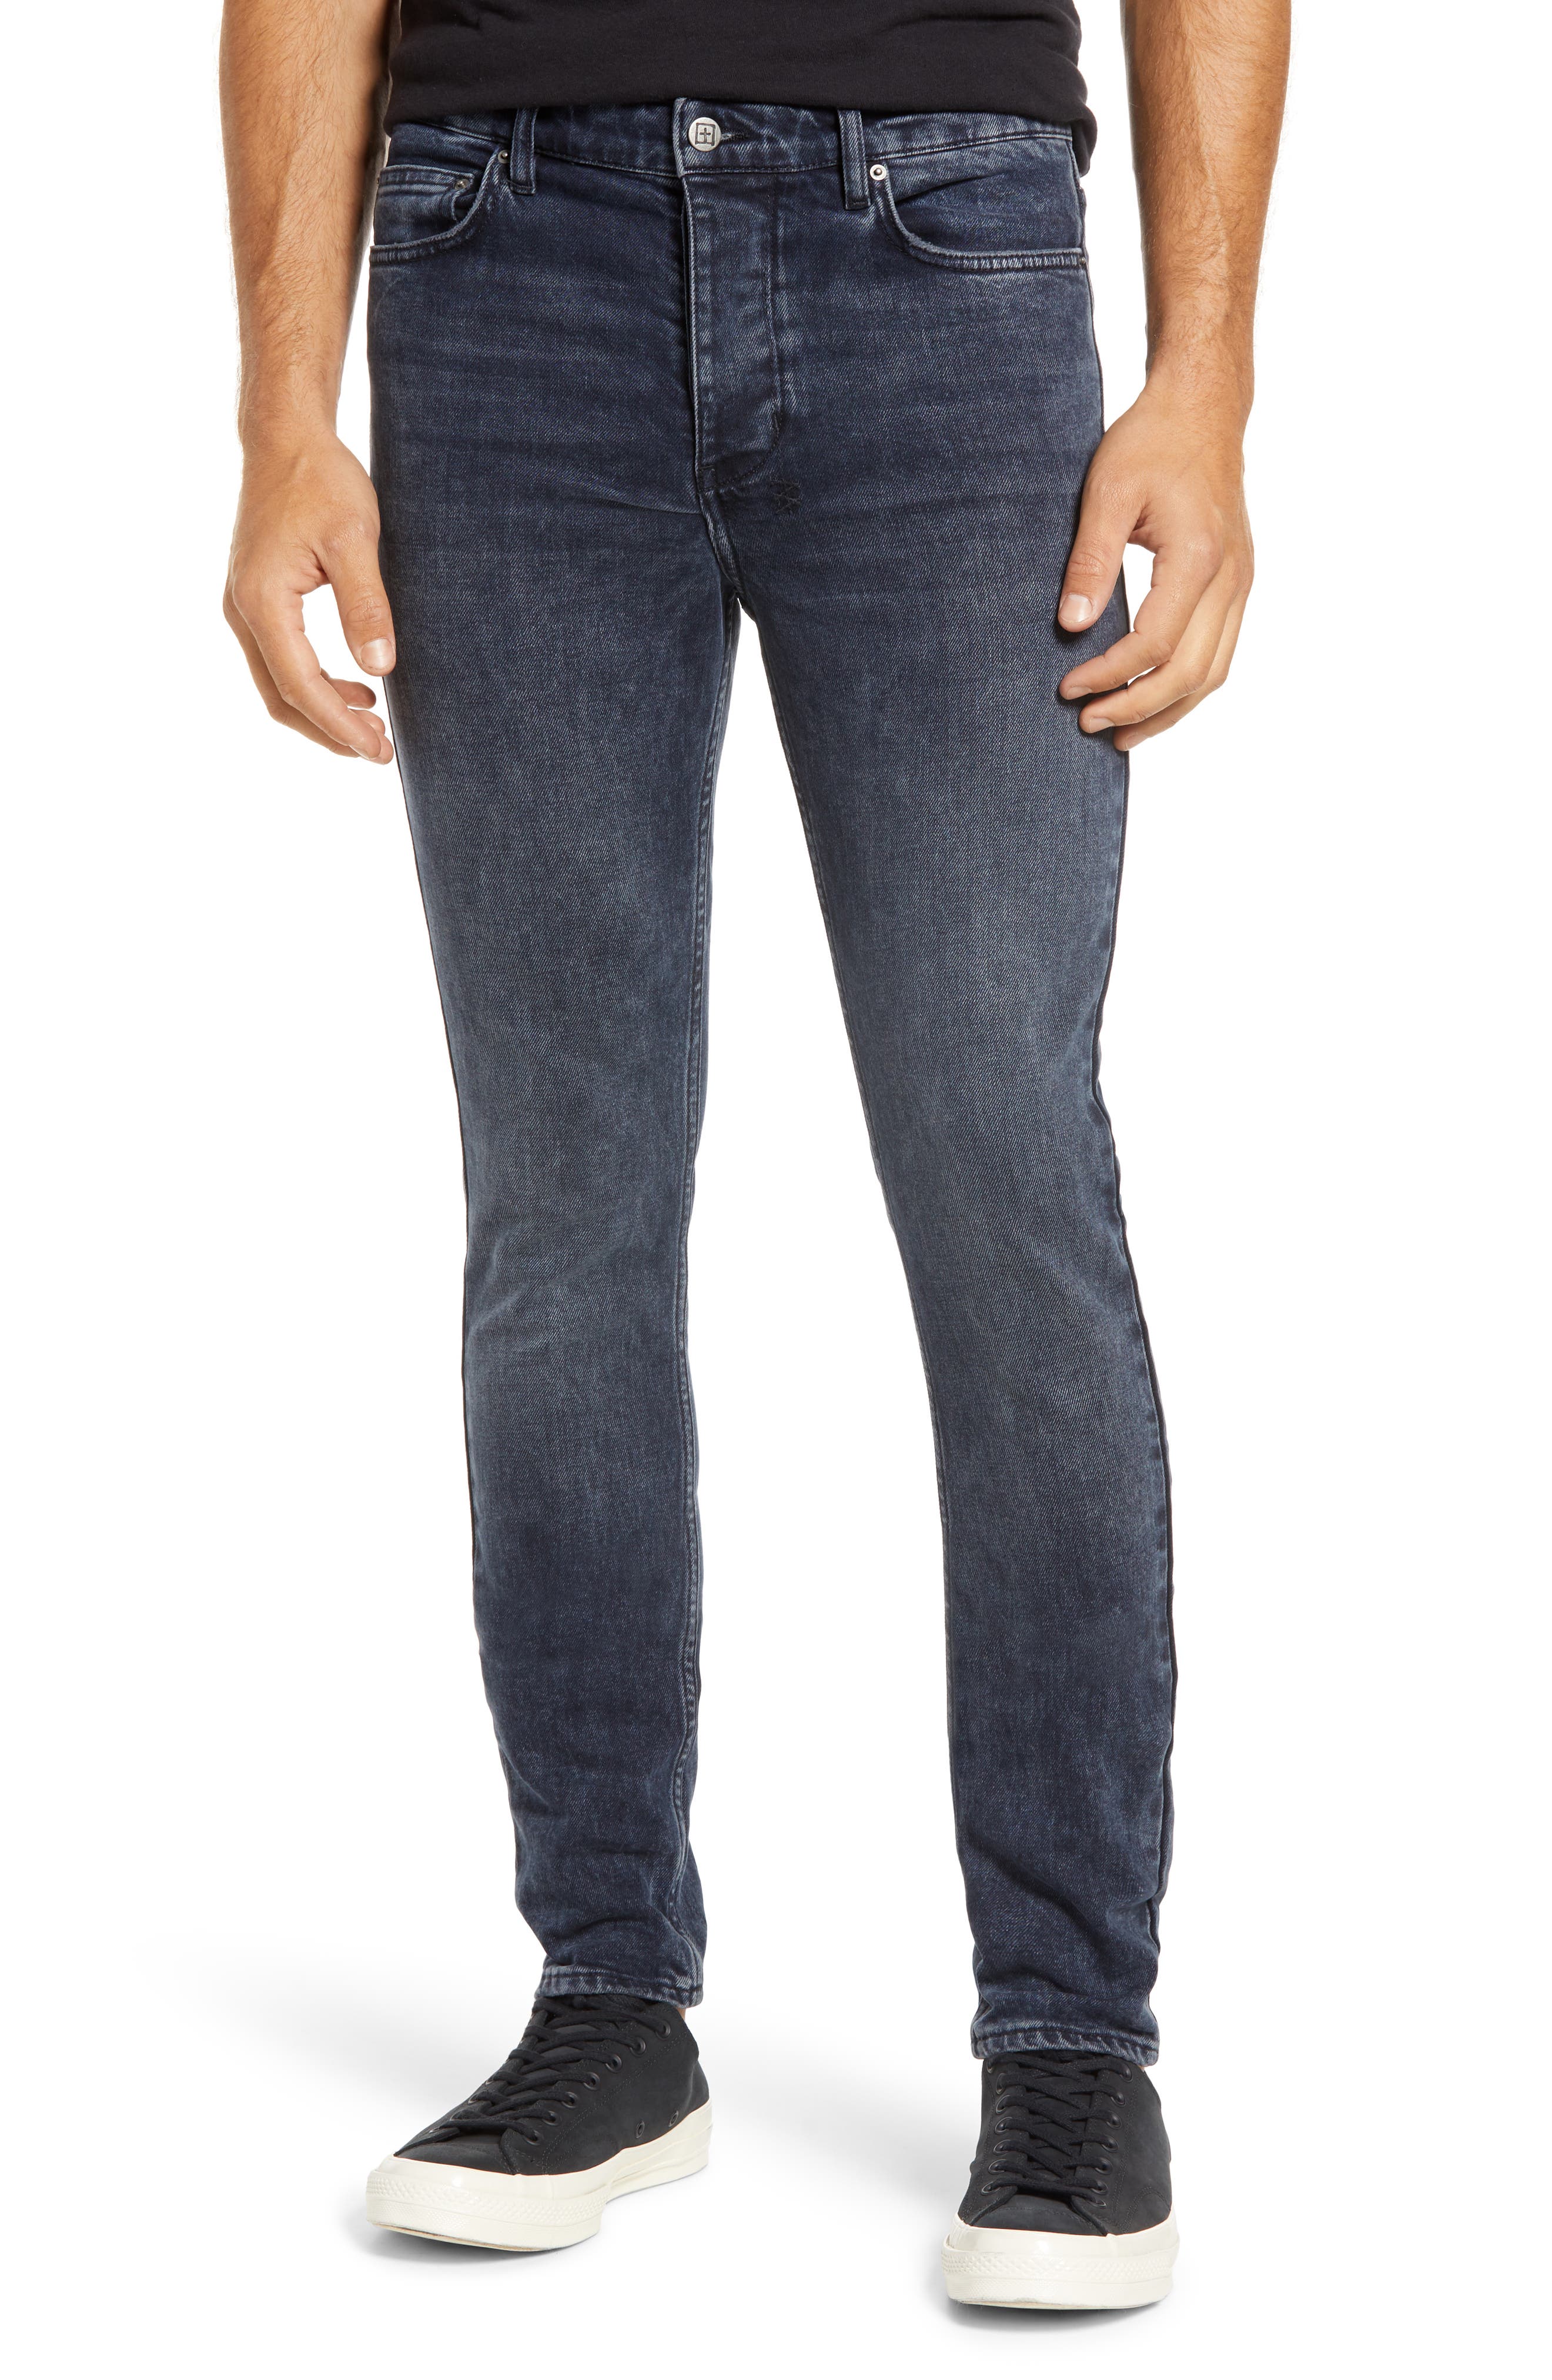 Ksubi Chitch Blue Kolla Slim Fit Jeans in Denim at Nordstrom, Size 33